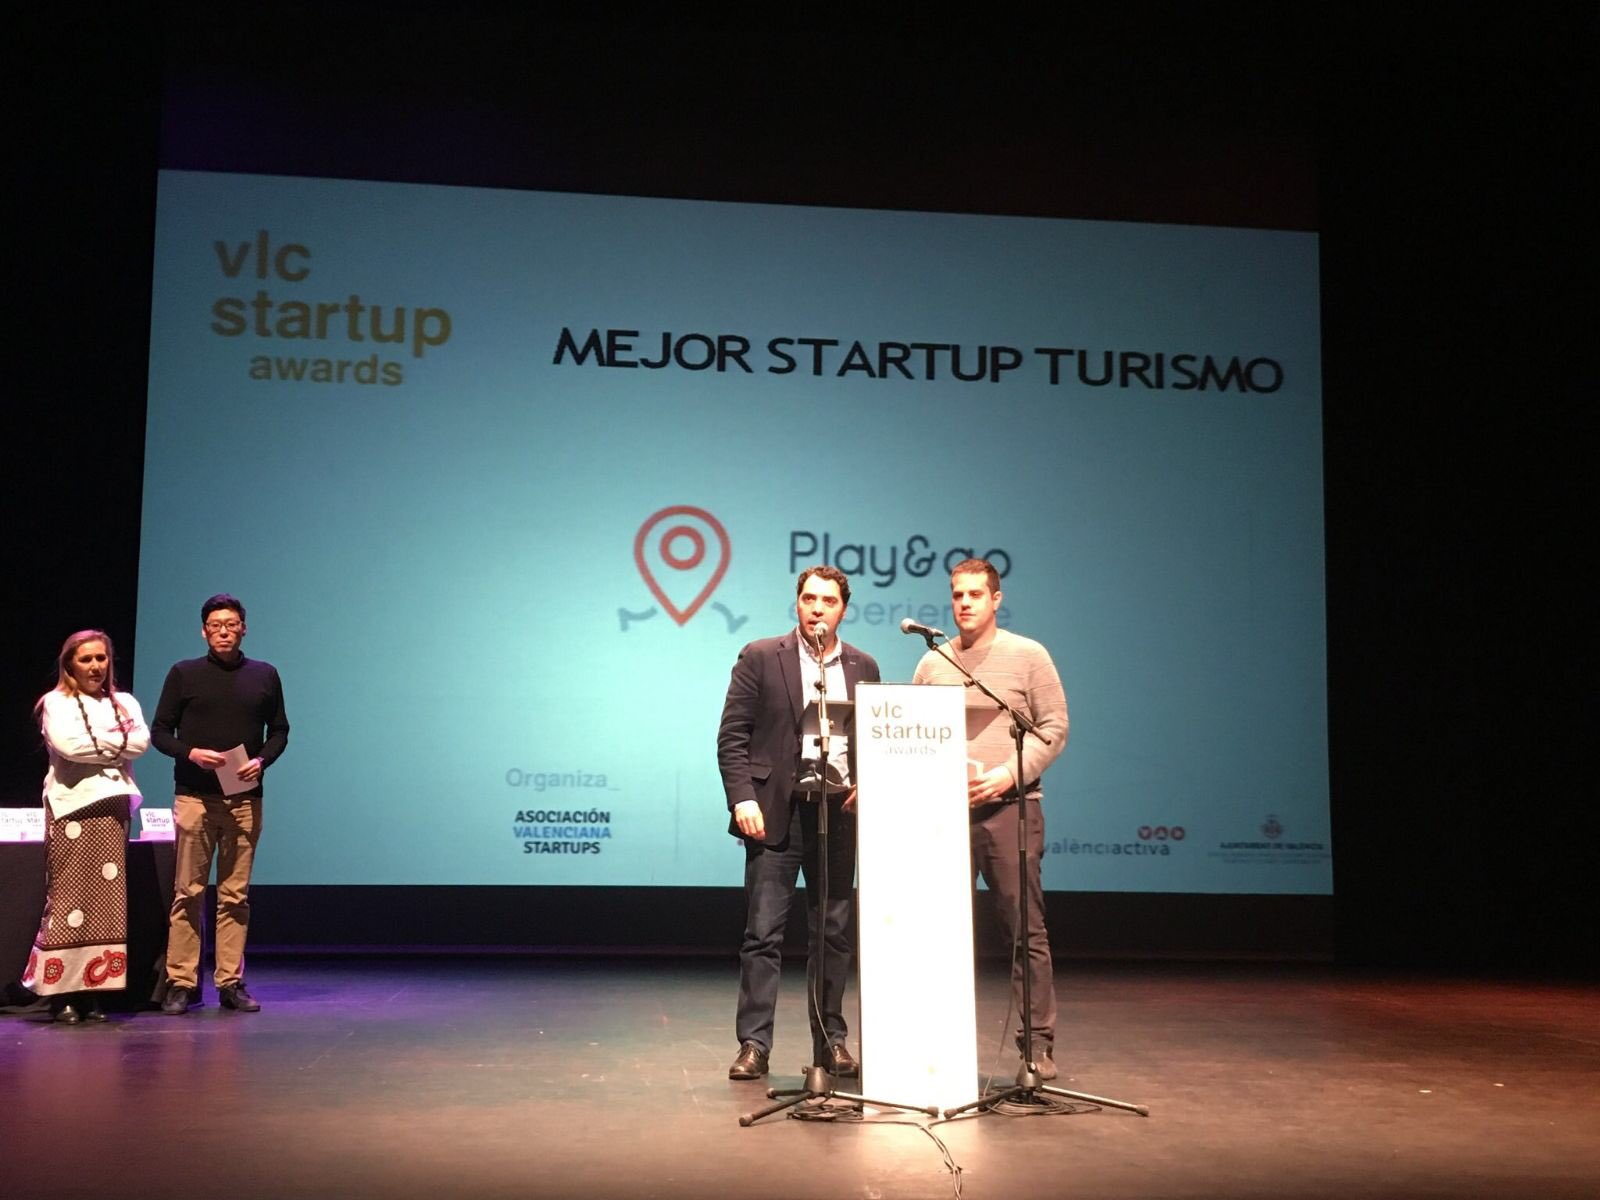 VLC Startup